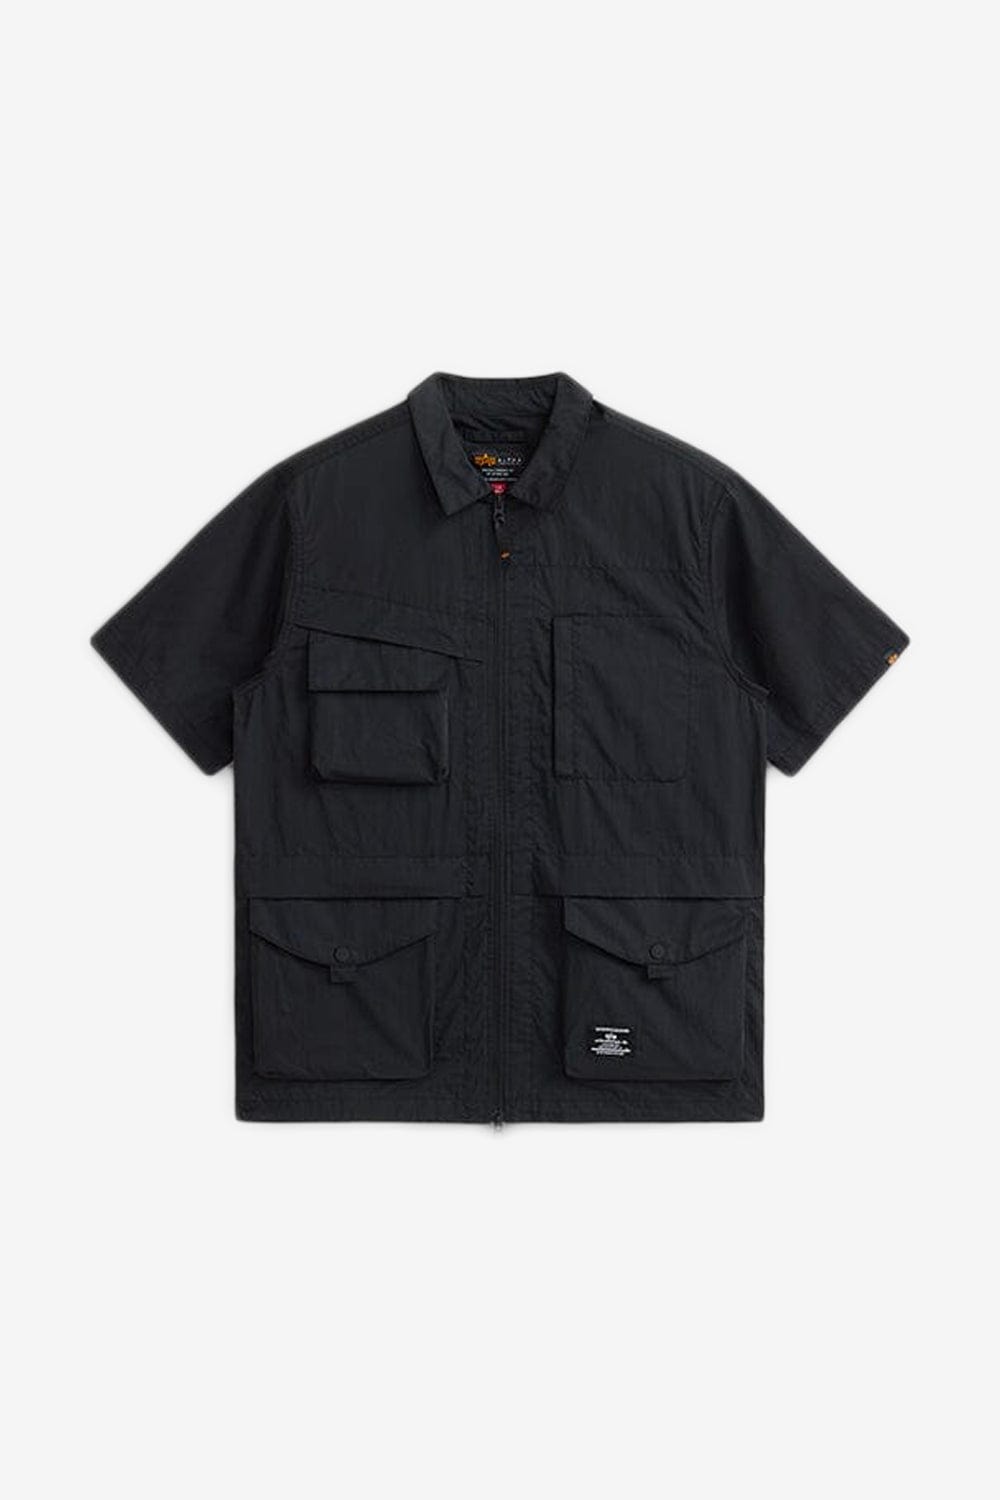 Alpha Industries Short Sleeve Multi Pocket Zippered Shirt Jacket (Black)